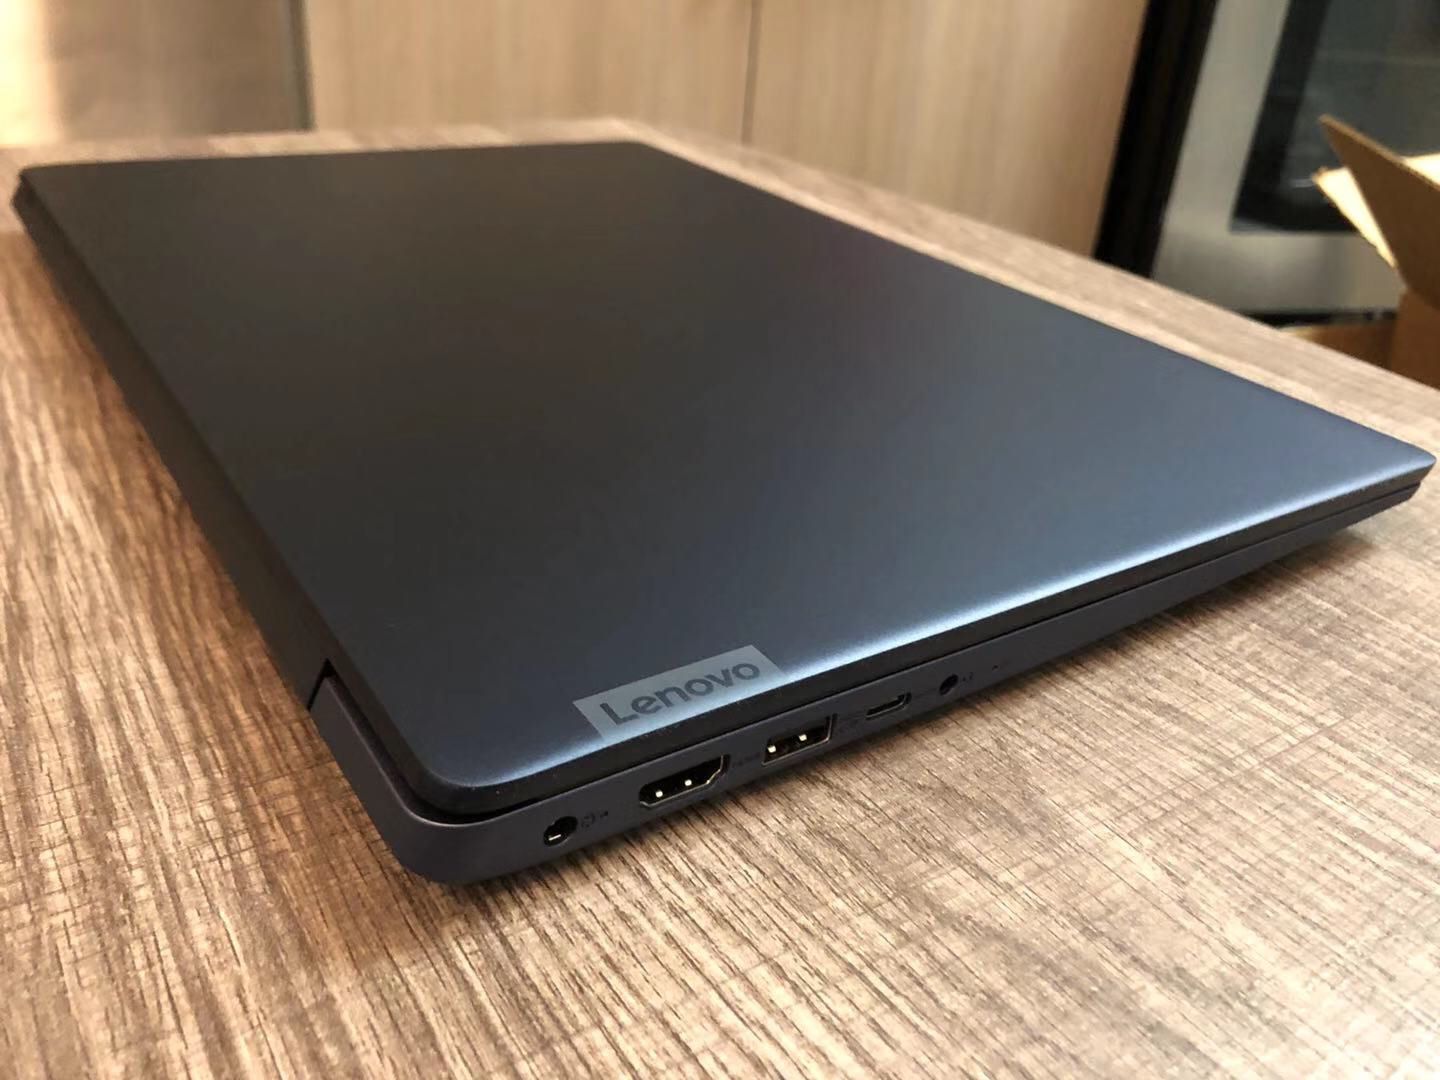 Lenovo IdeaPad 330S 15.6 inch (1TB, i5-8250U, 8GB) Brand New